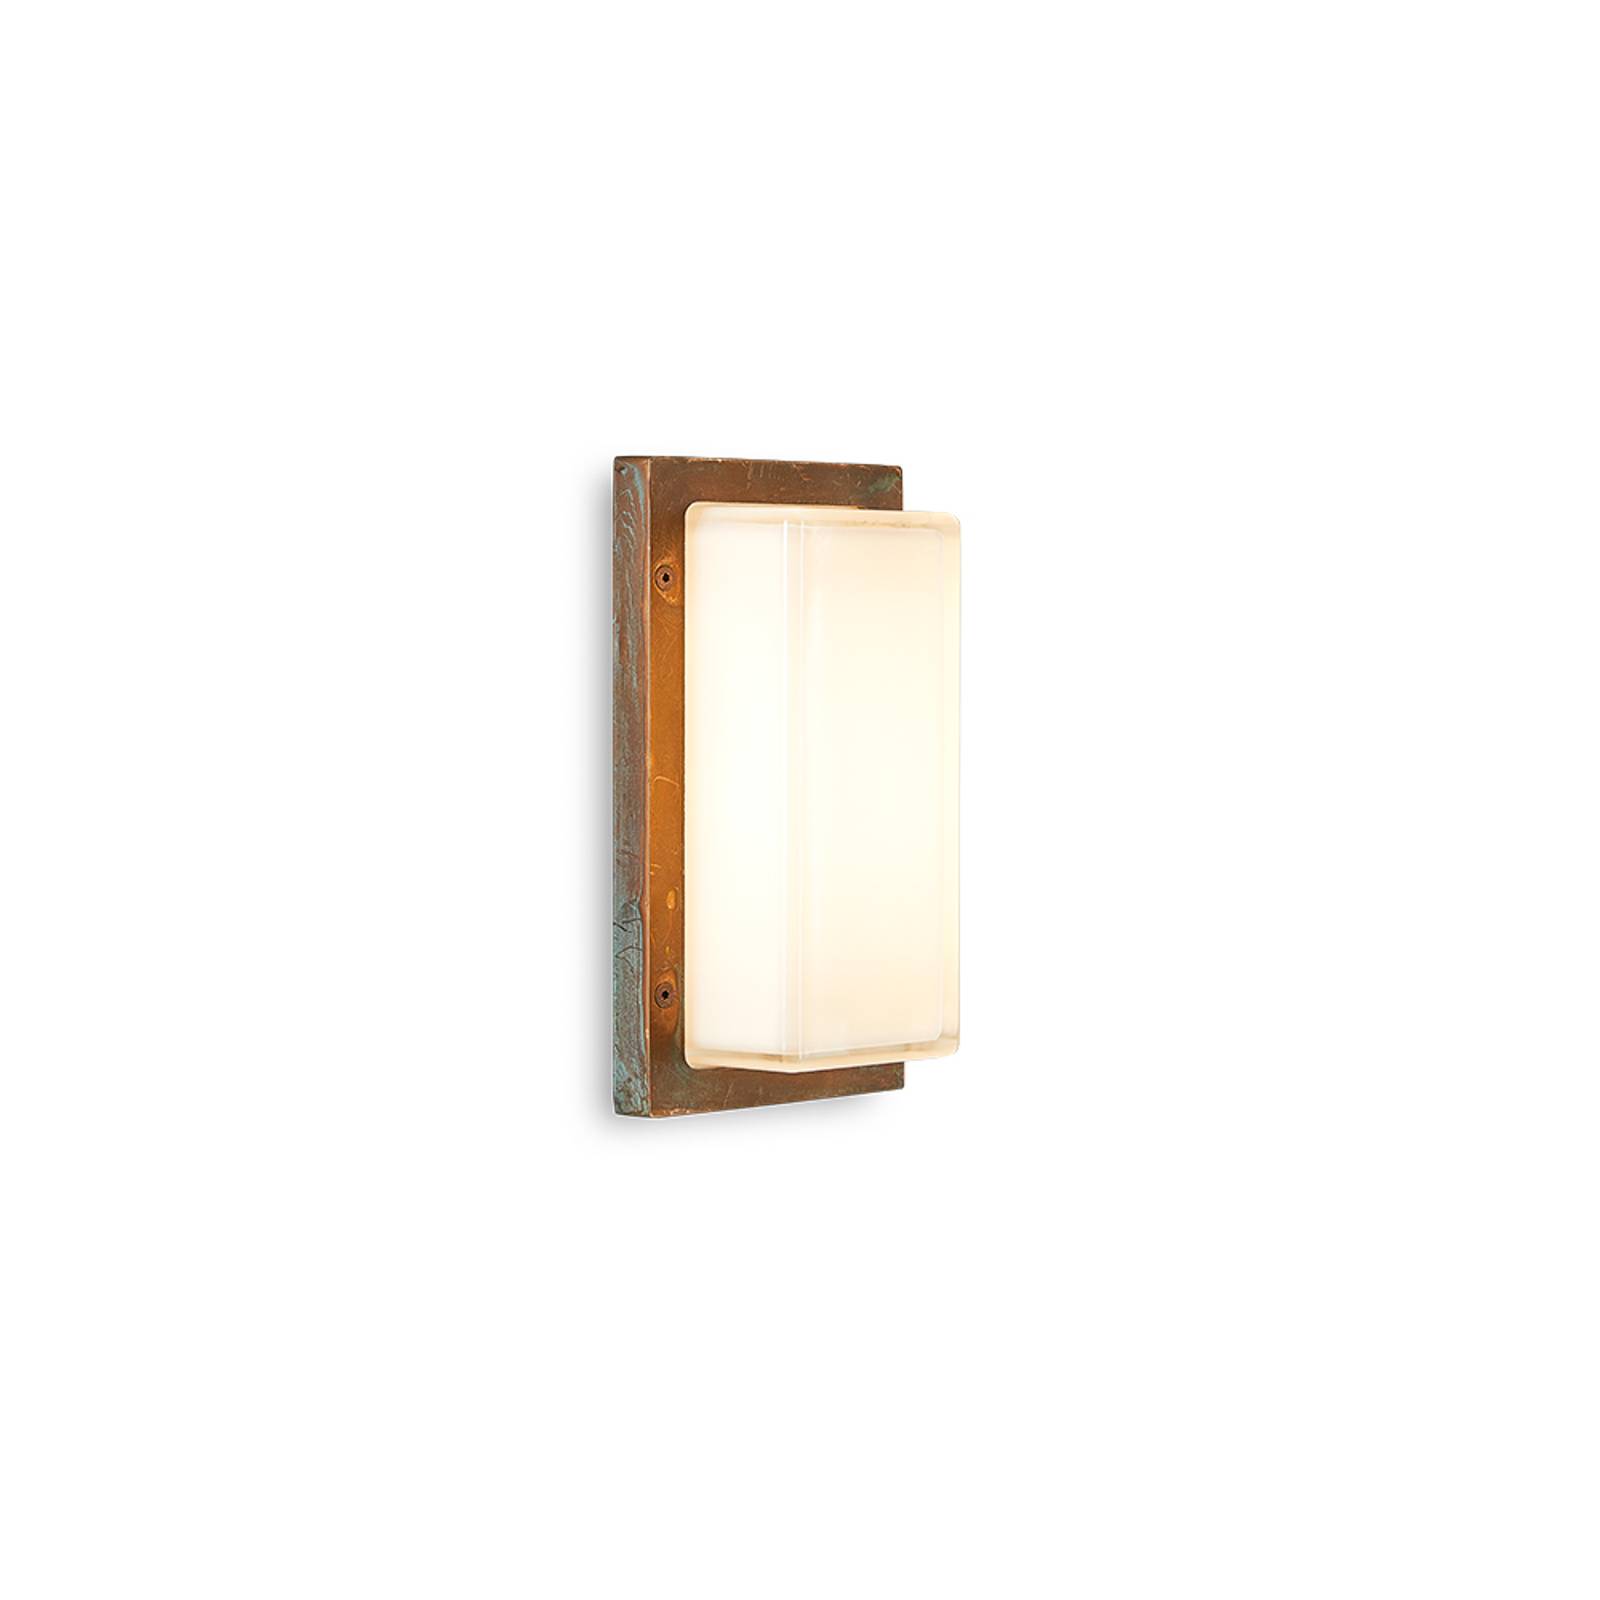 Moretti luce kültéri fali lámpa ice cubic 3410, antik sárgaréz